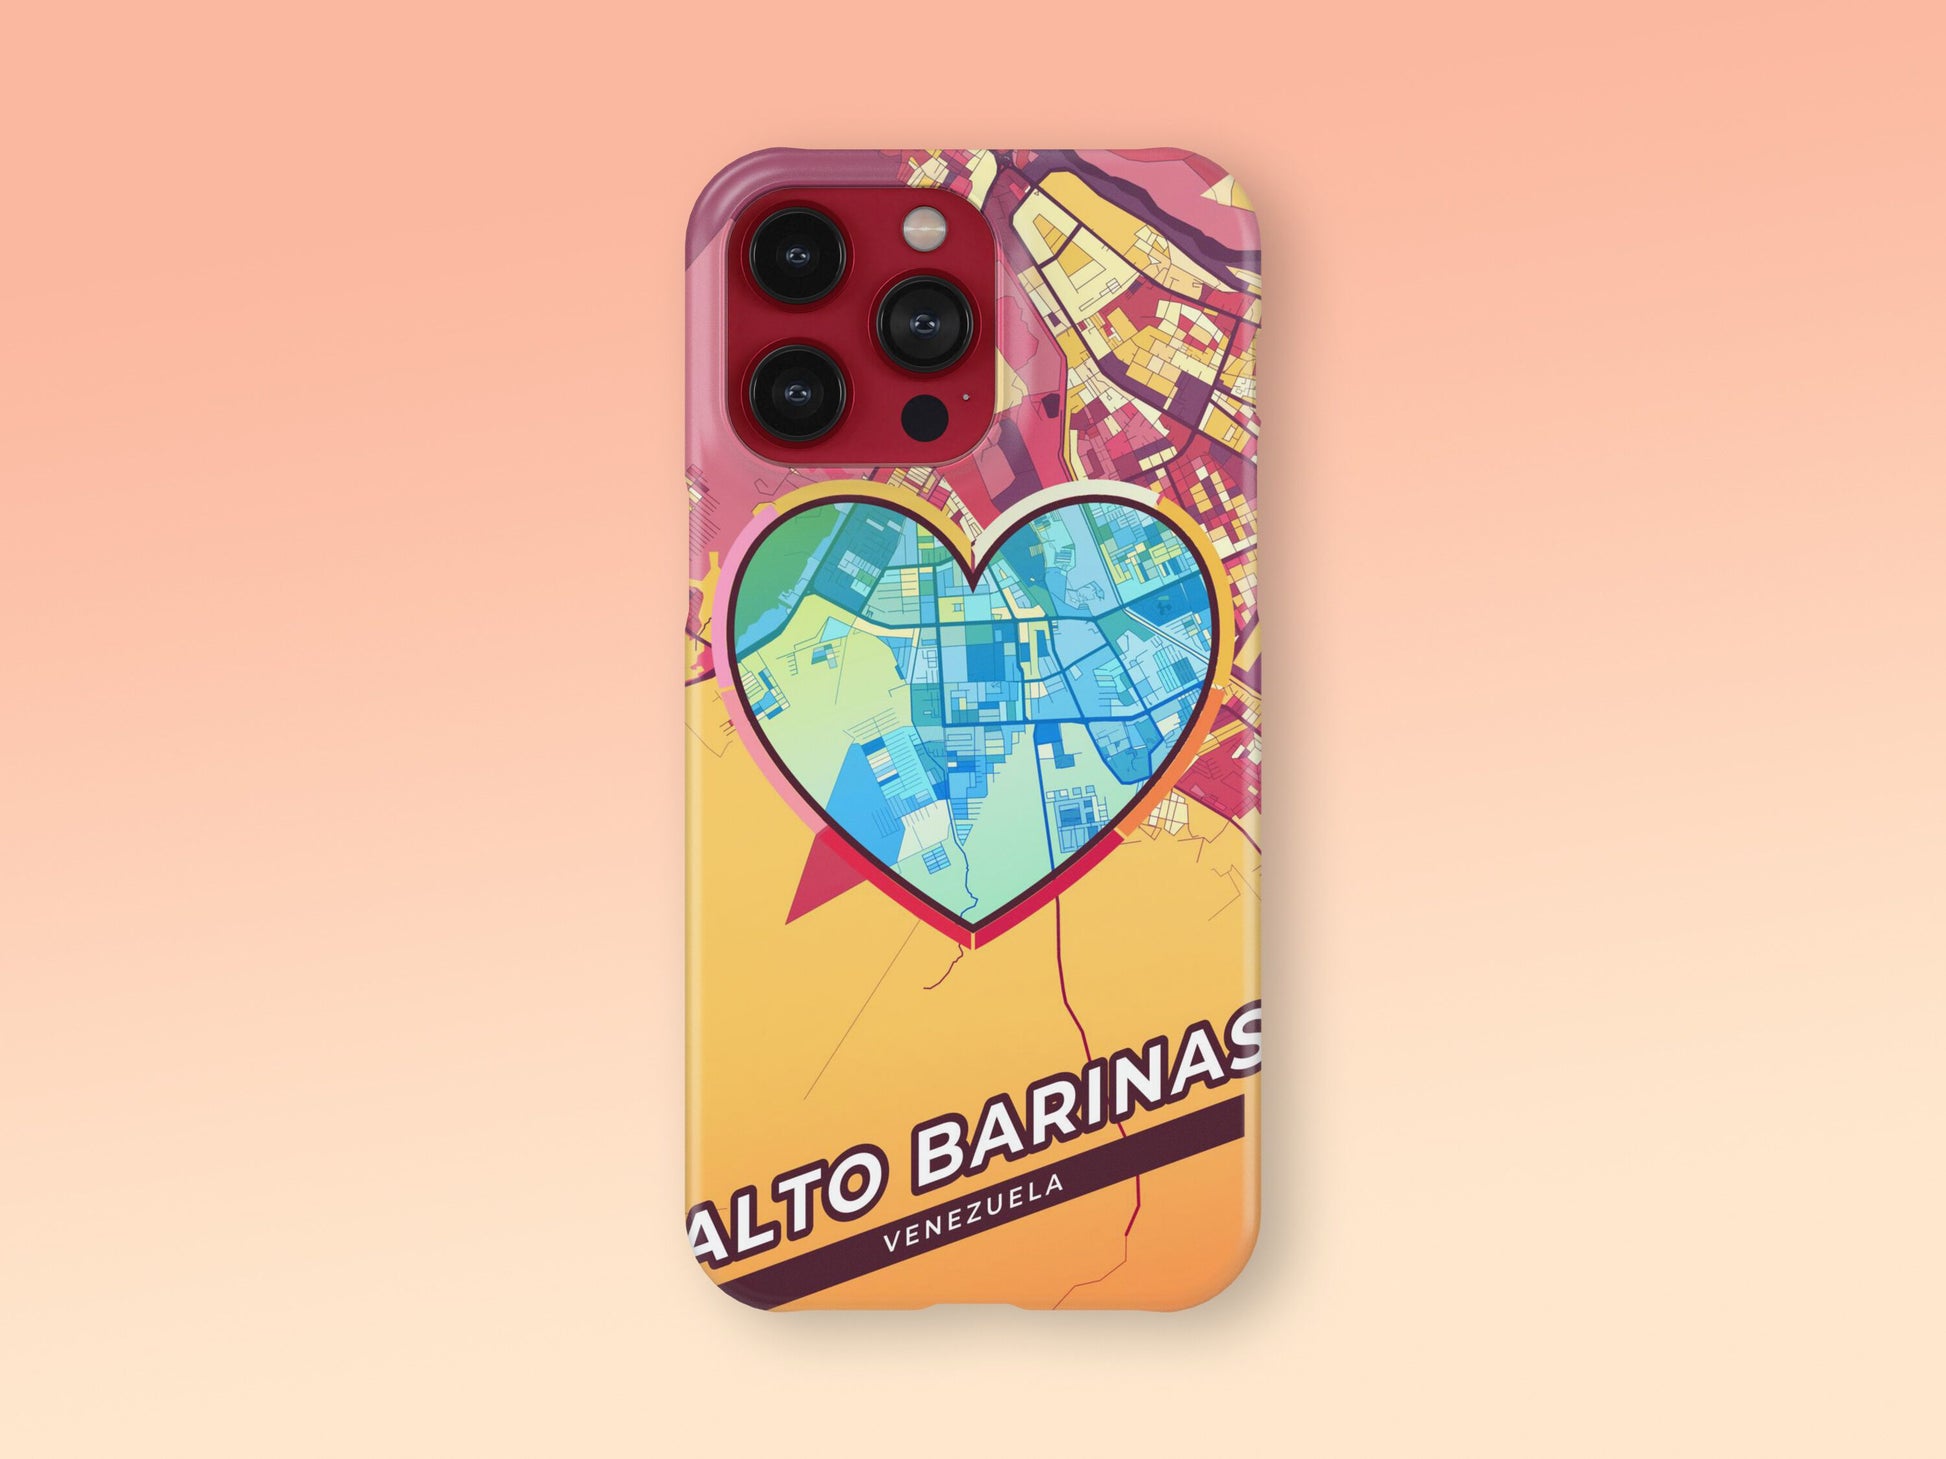 Alto Barinas Venezuela slim phone case with colorful icon. Birthday, wedding or housewarming gift. Couple match cases. 2